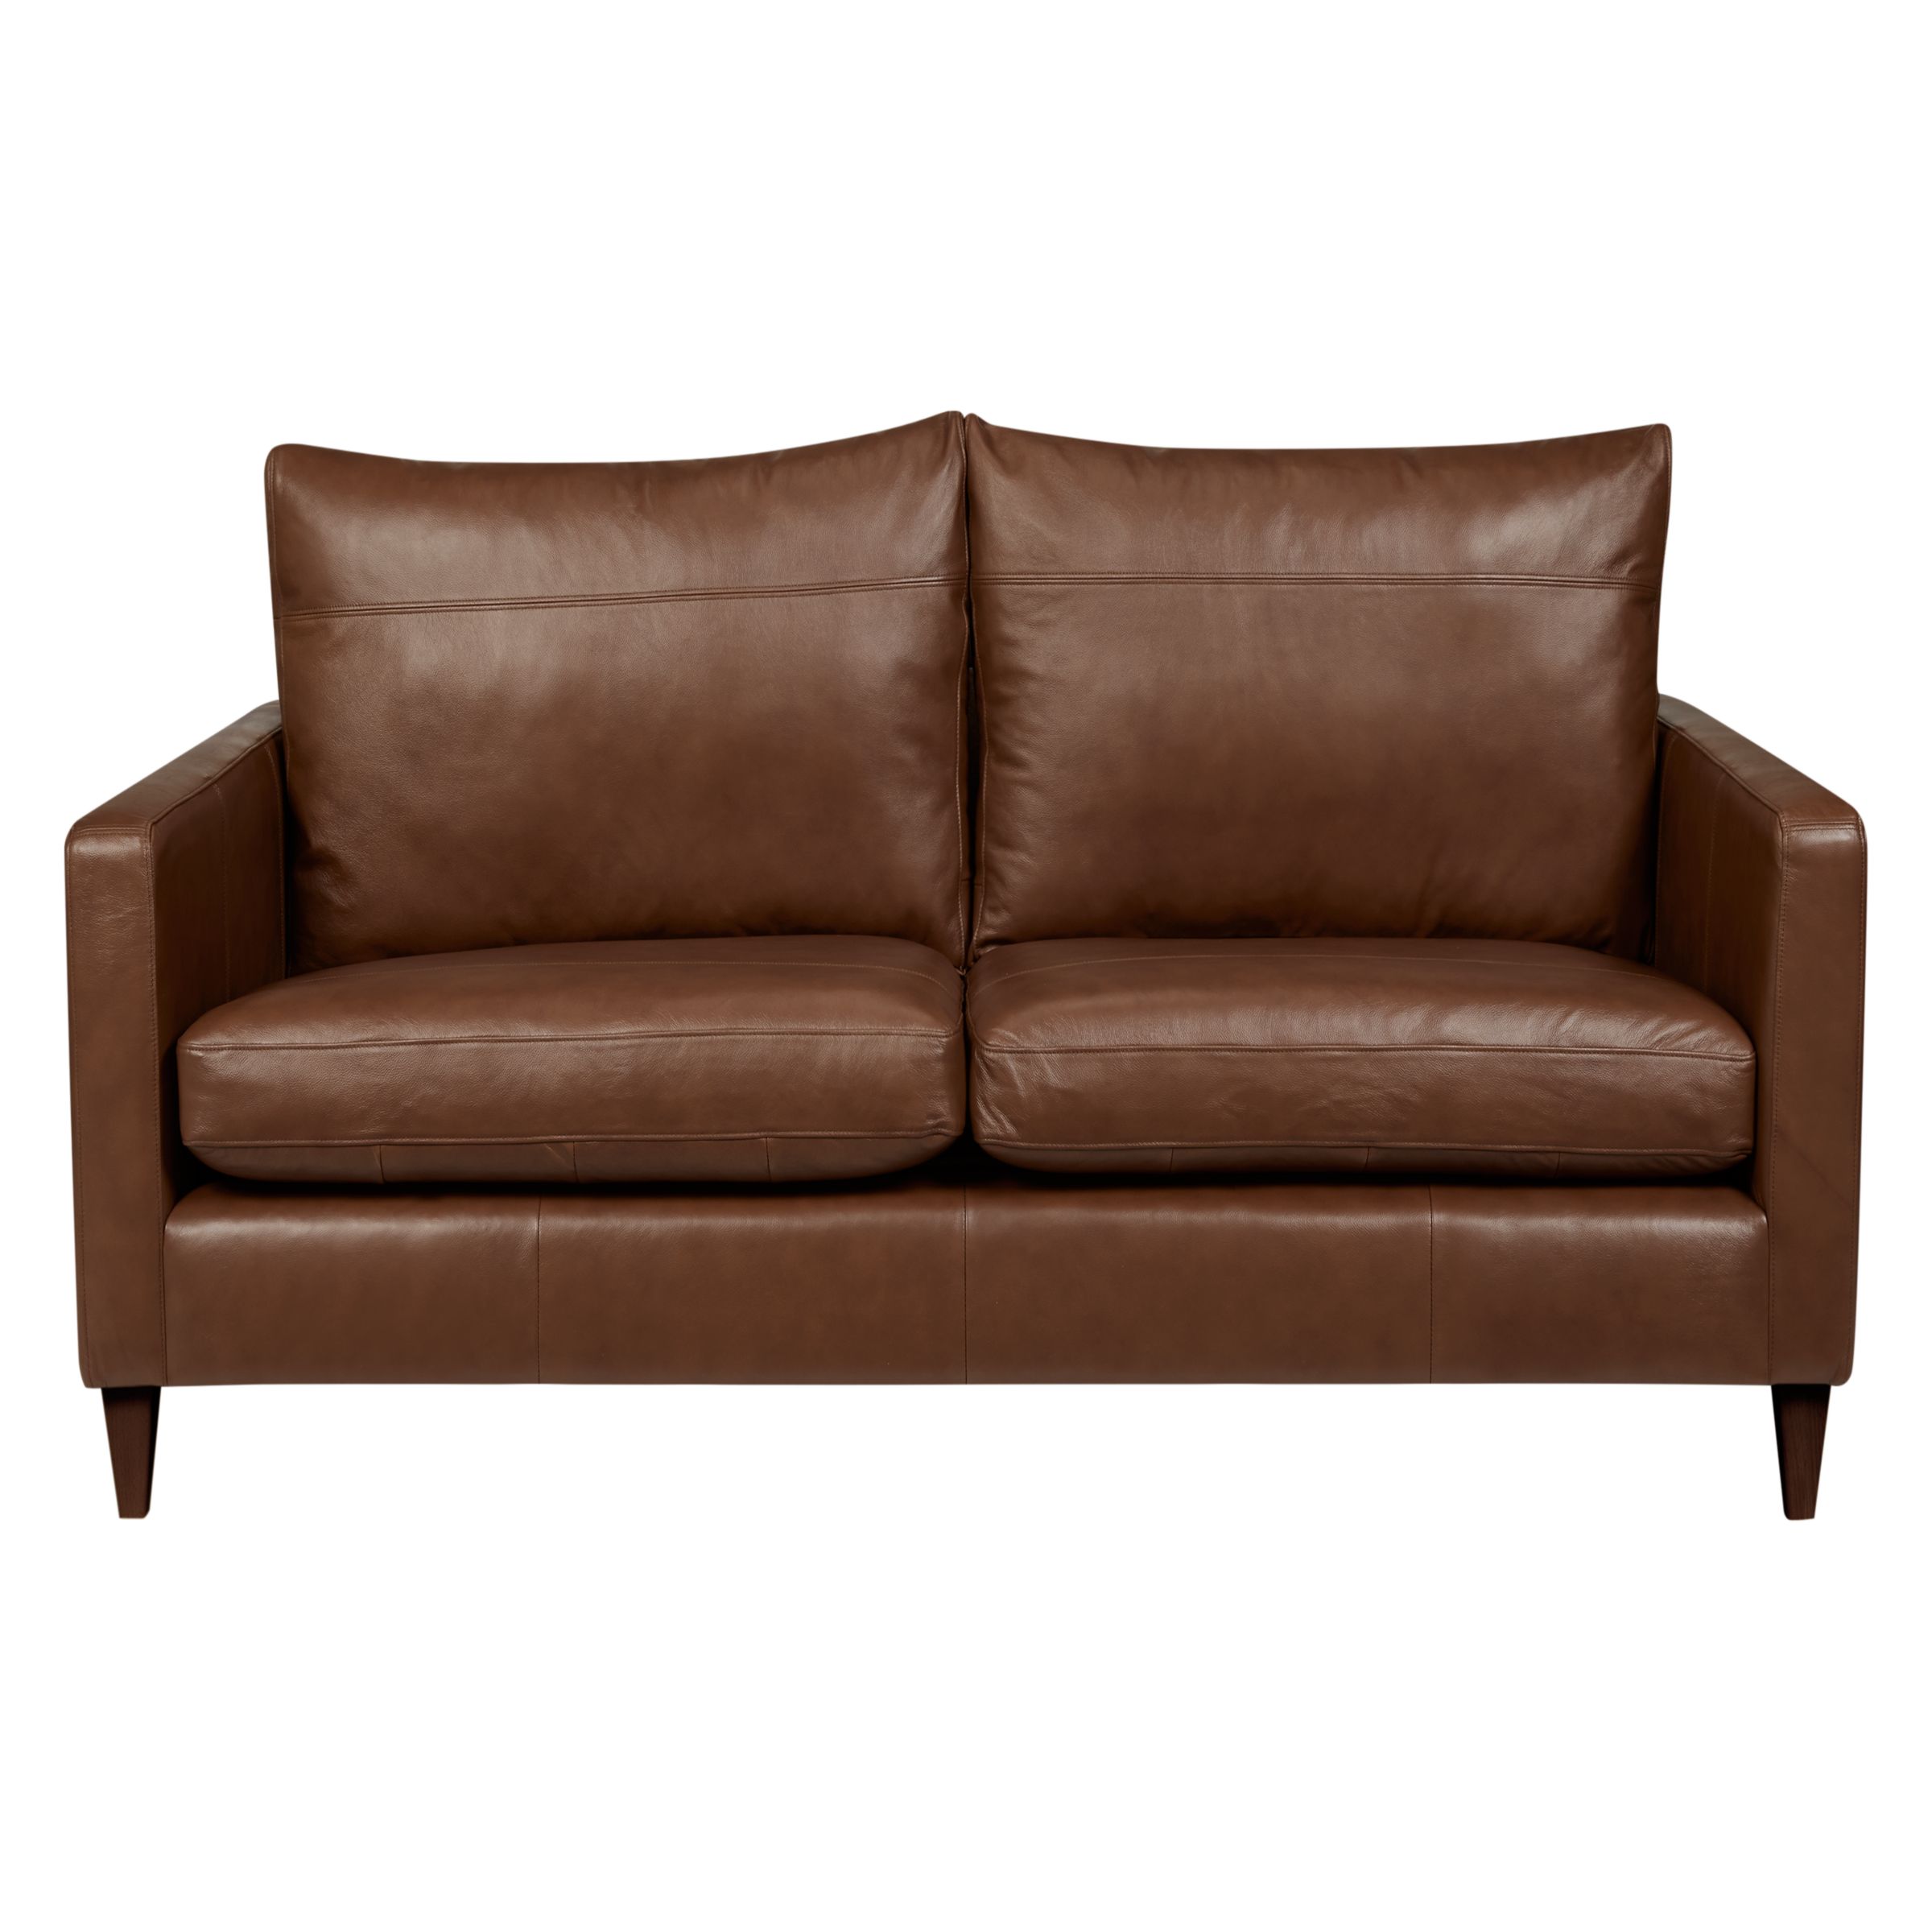 John Lewis & Partners Bailey Leather Small 2 Seater Sofa, Dark Leg